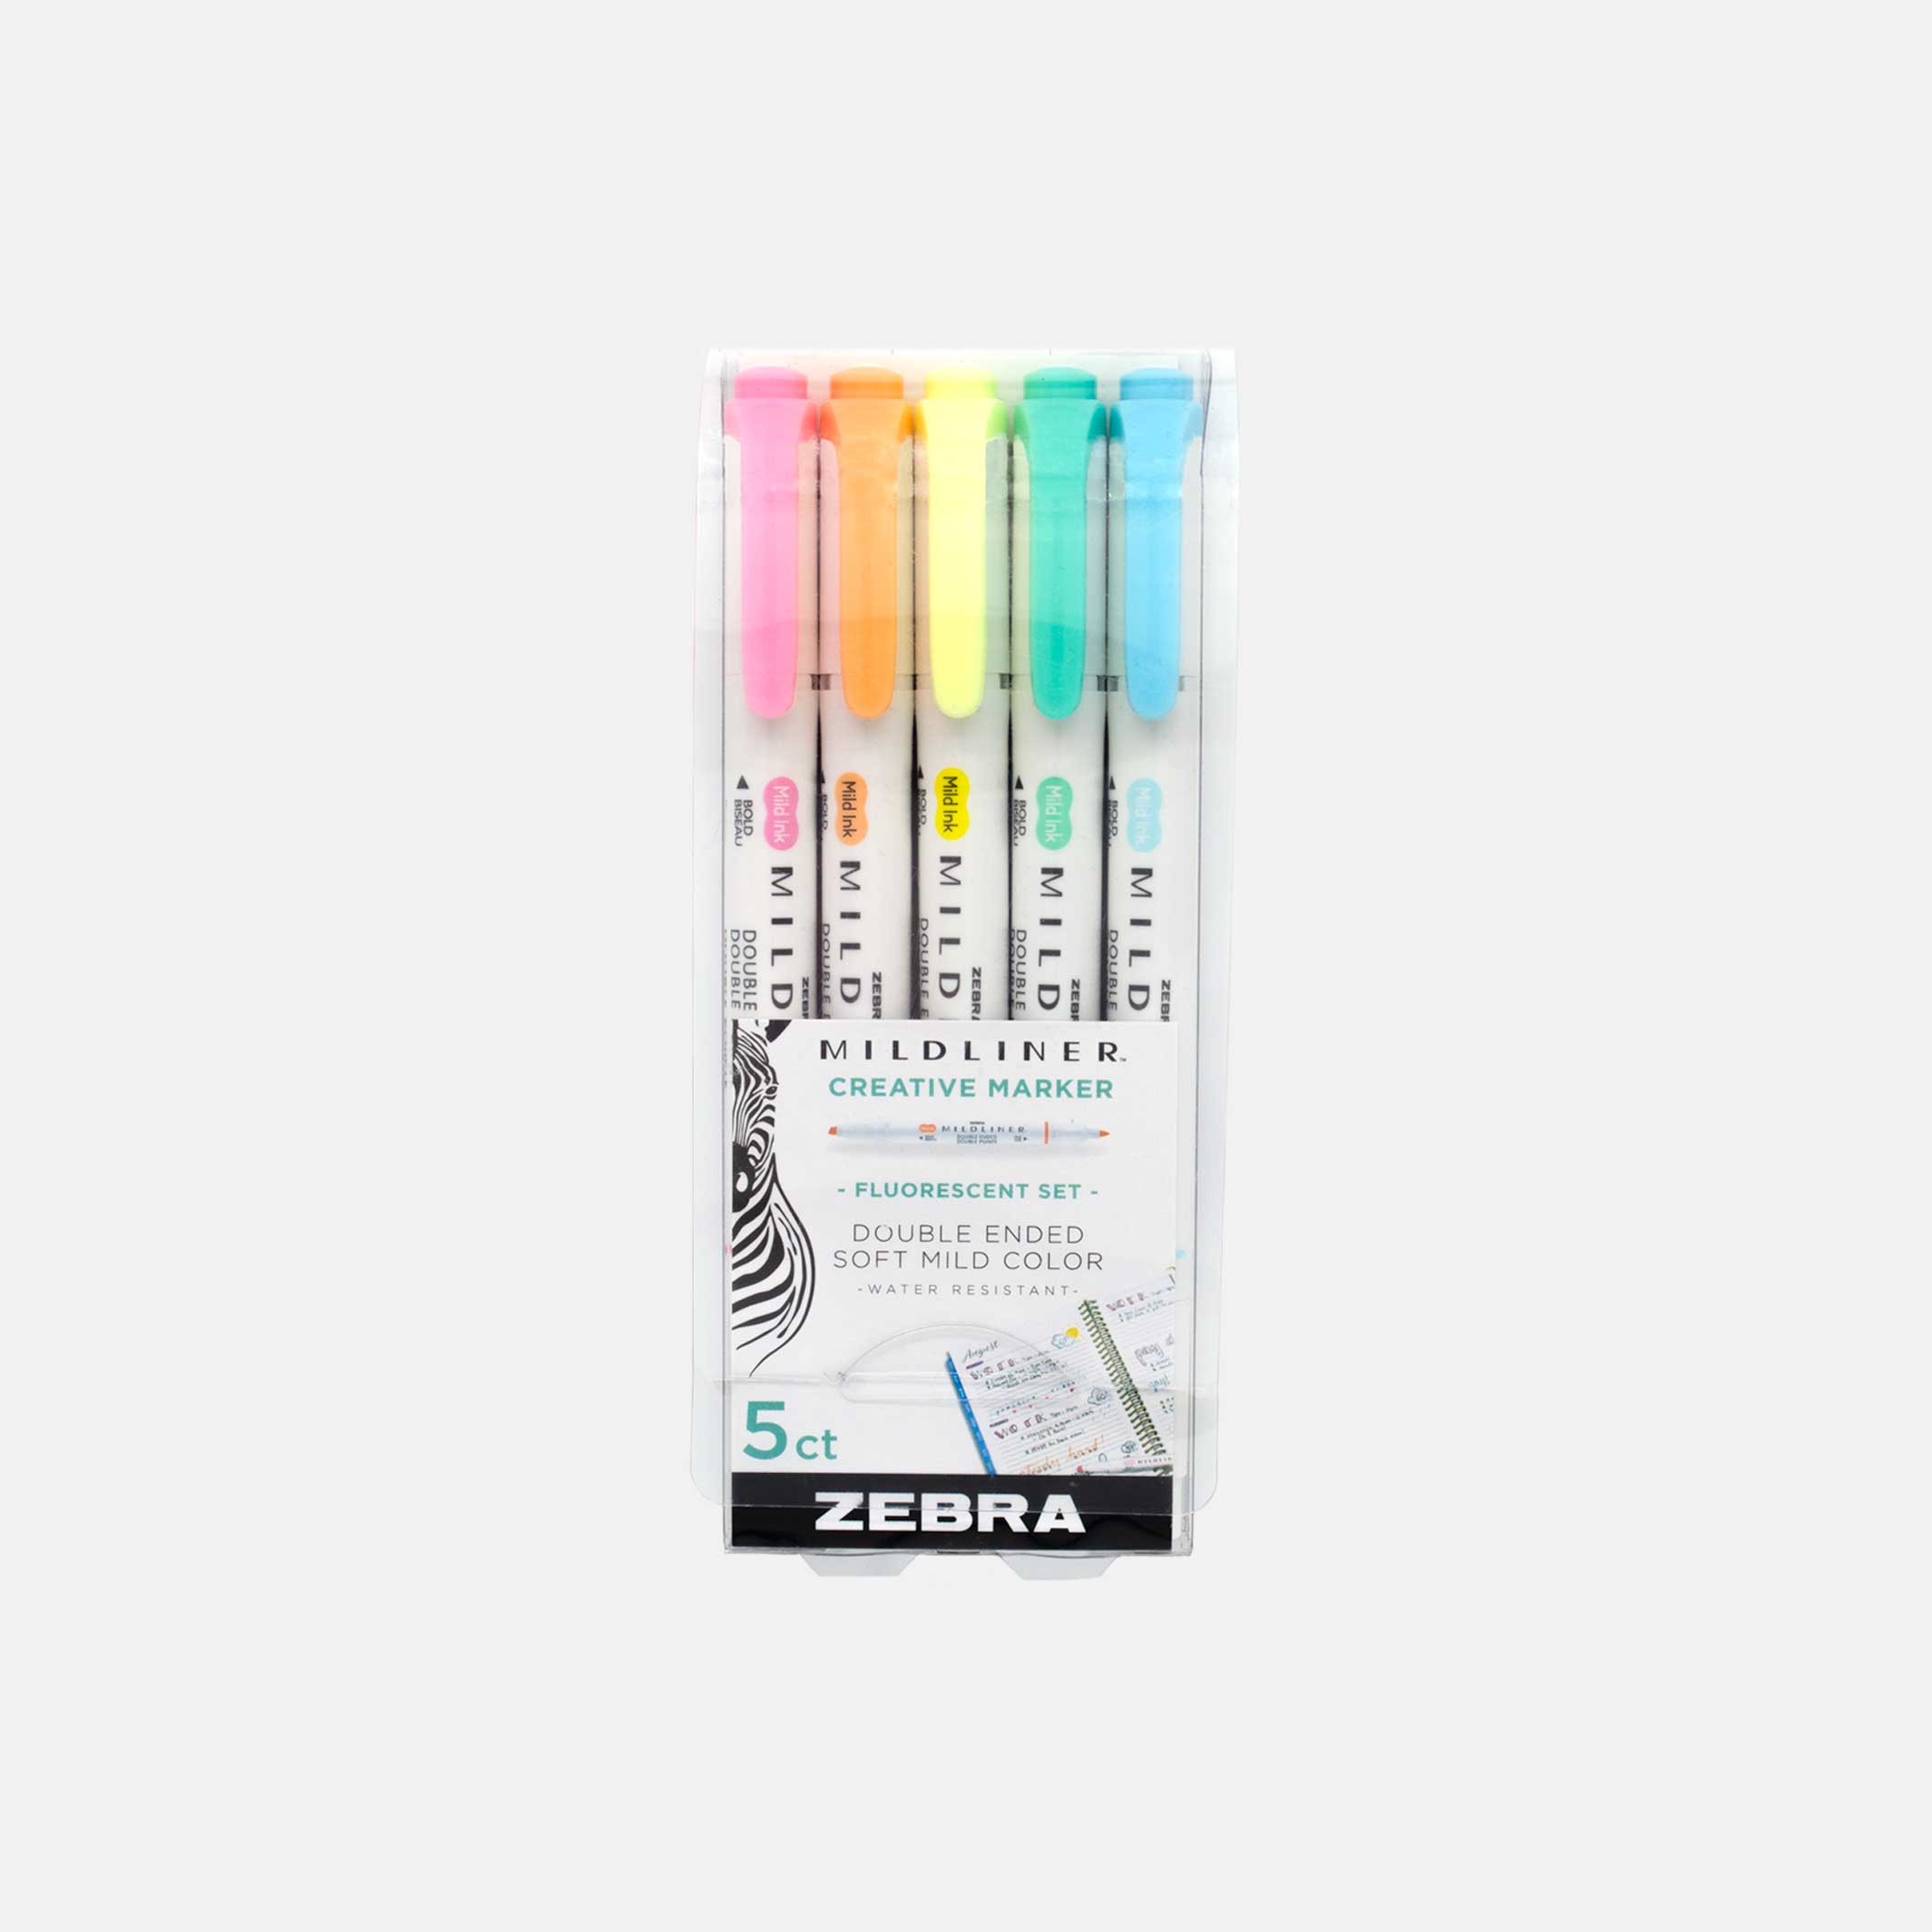 Zebra mildliner creative marker 5 pack. Fluorescent set of double ended soft mild colors and water resistance.